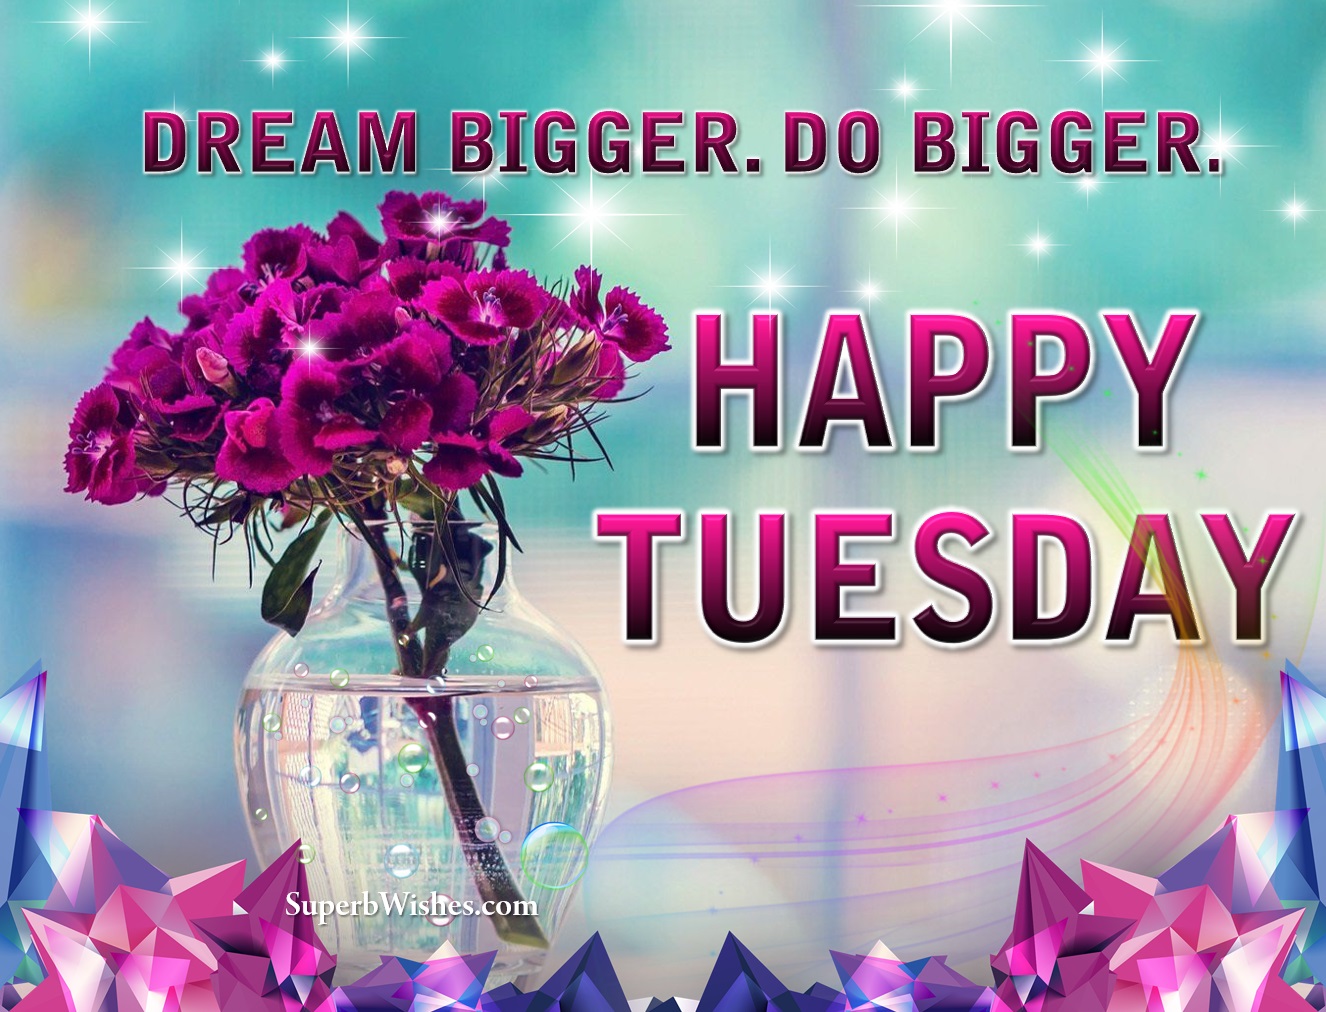 Dream bigger. Do bigger. Happy Tuesday flowers image. Superbwishes.com